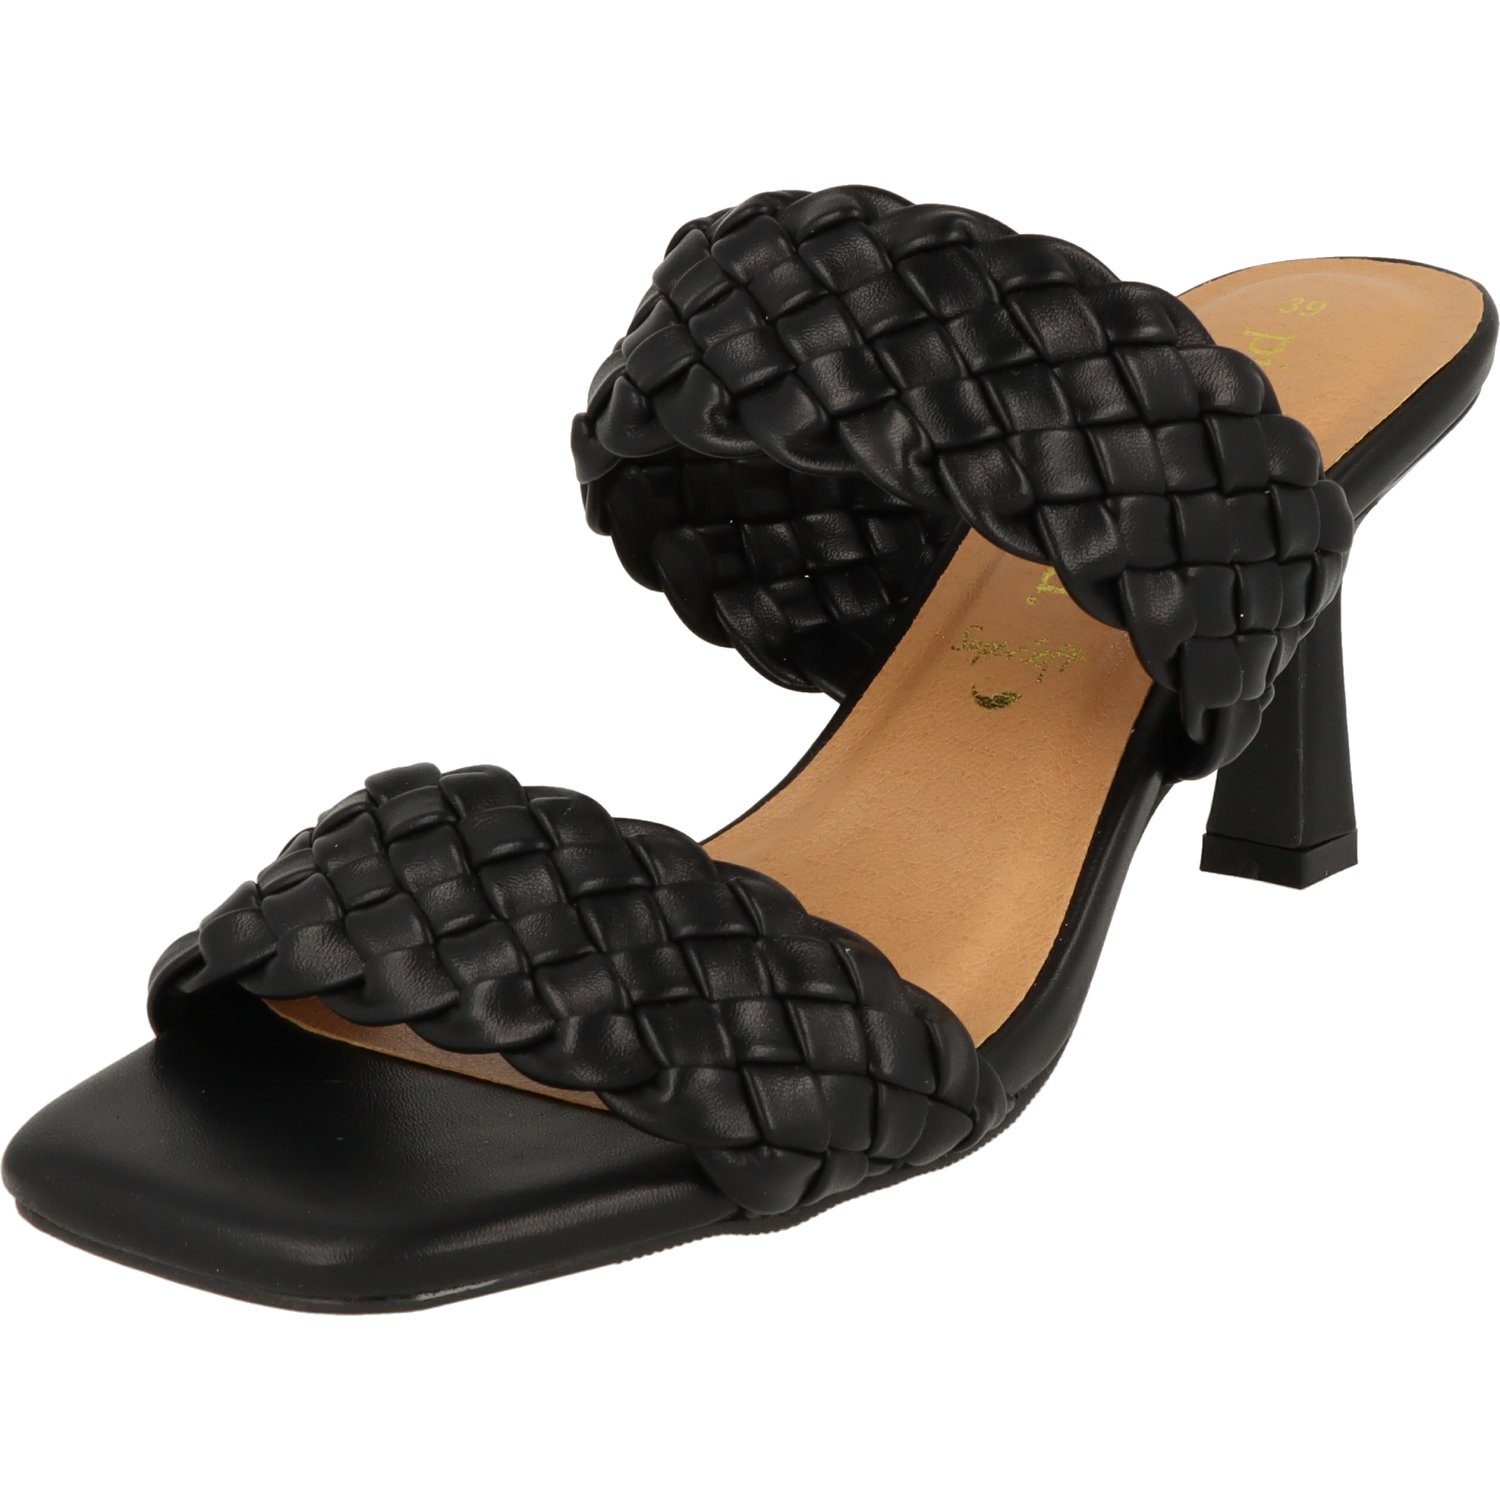 piece of mind. Damen Schuhe Slipper Black 273-161 High-Heel-Sandalette elegante Absatzsandale